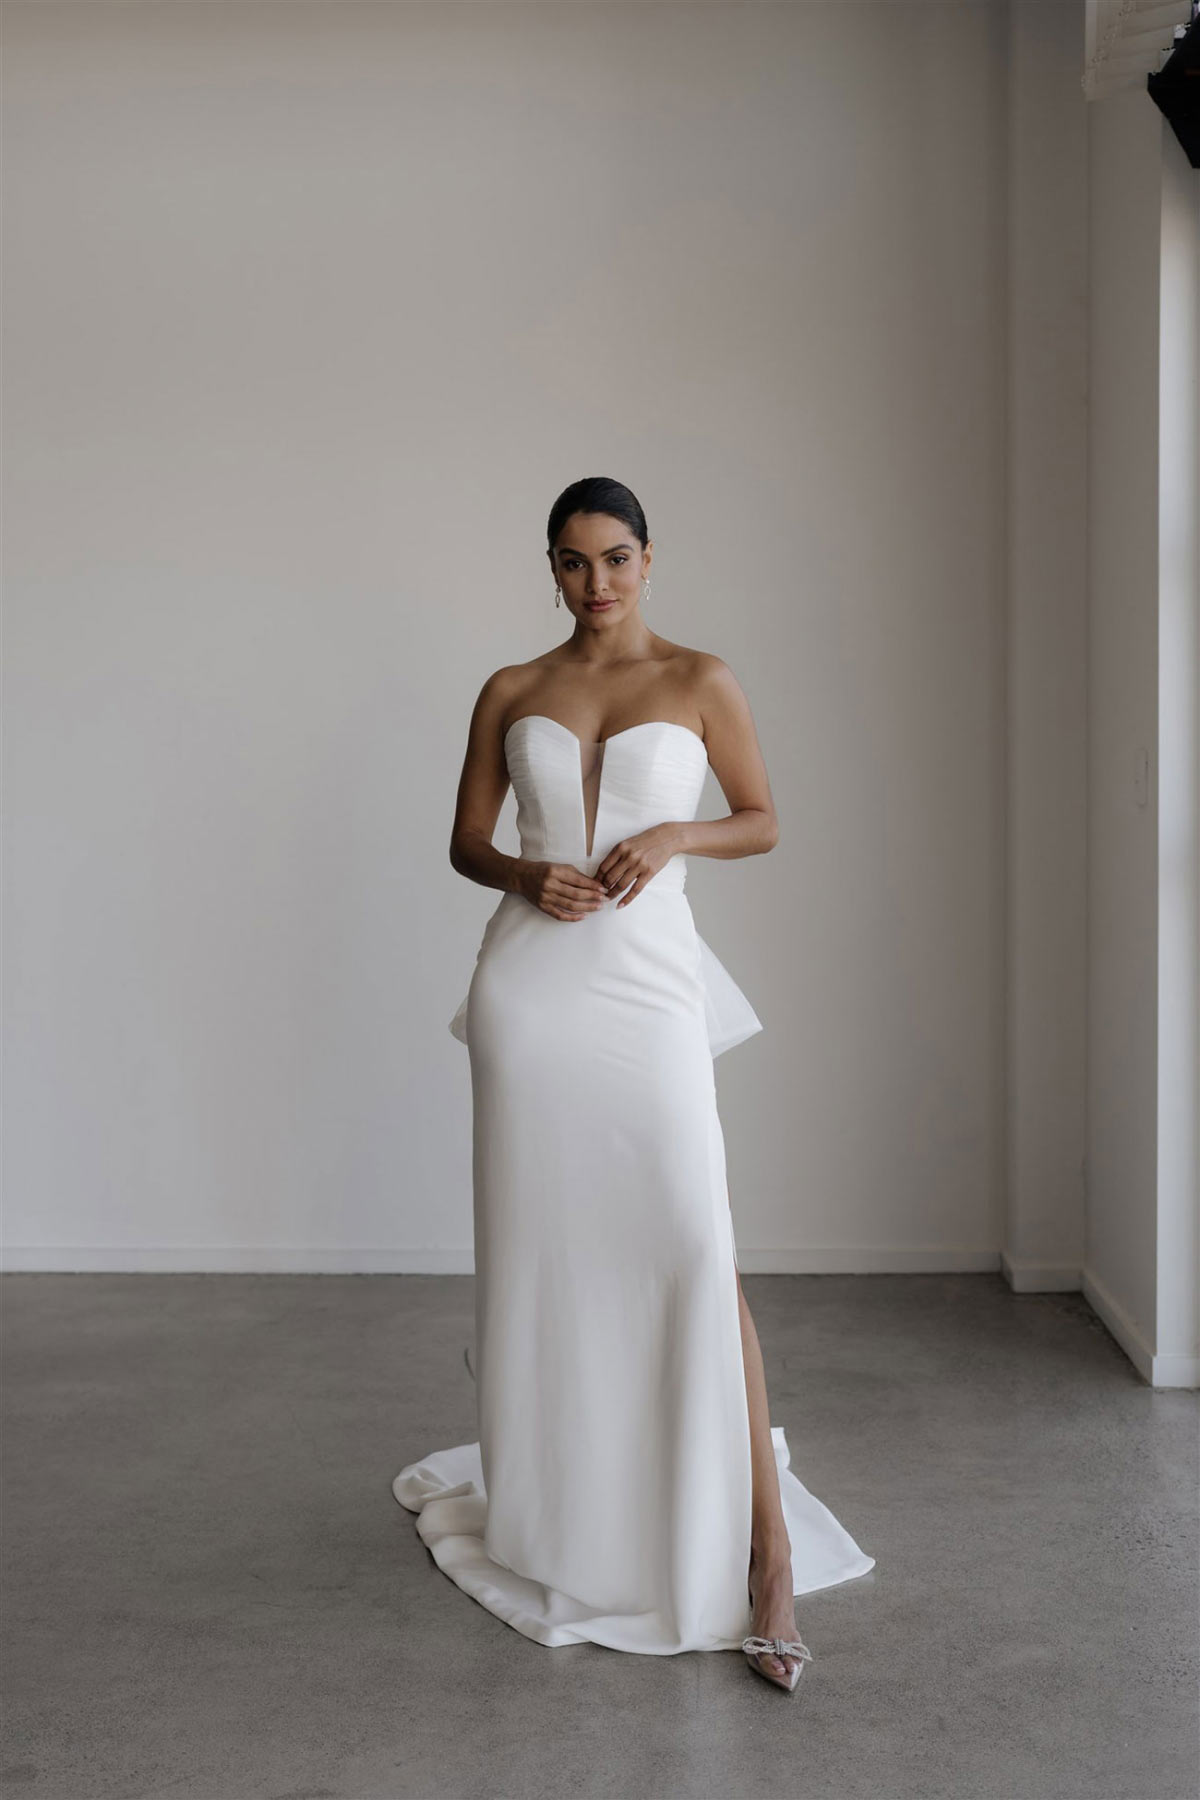 https://www.wedmagazine.co.uk/content/articlethumblarge/st-ives-bridal-boutique-cornwall-wedding-dresses3.jpg